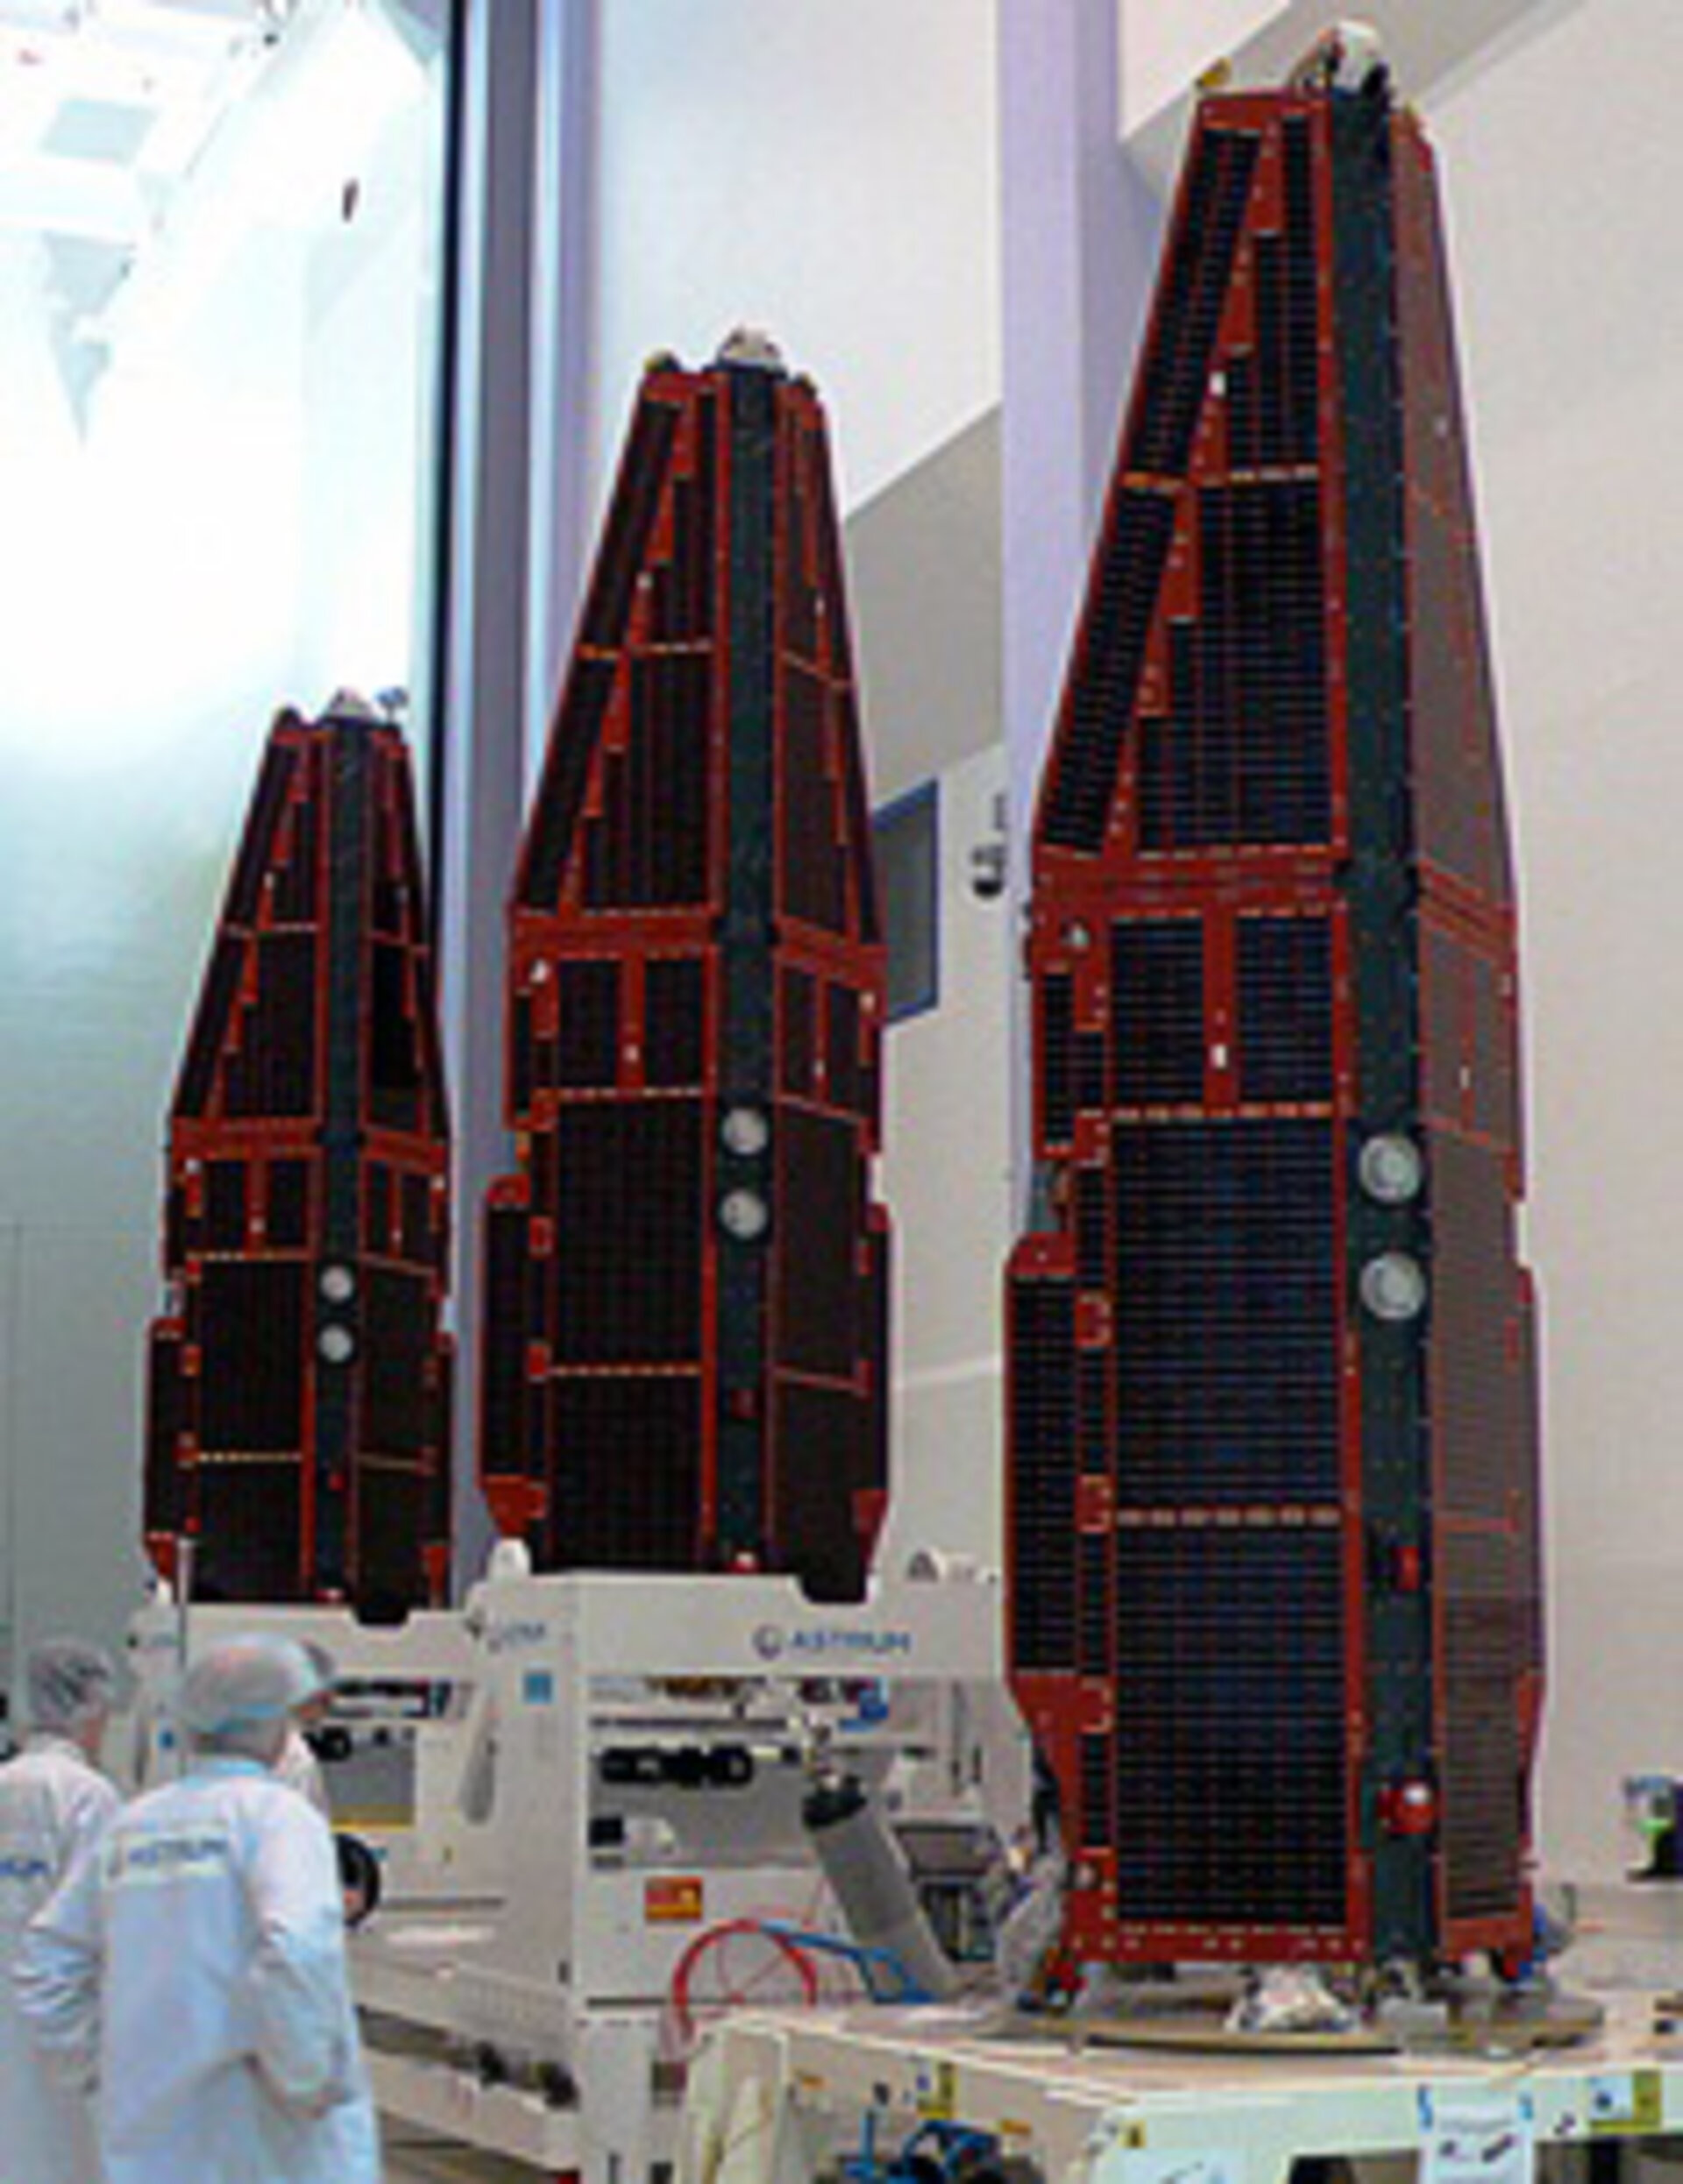 Three Swarm satellites